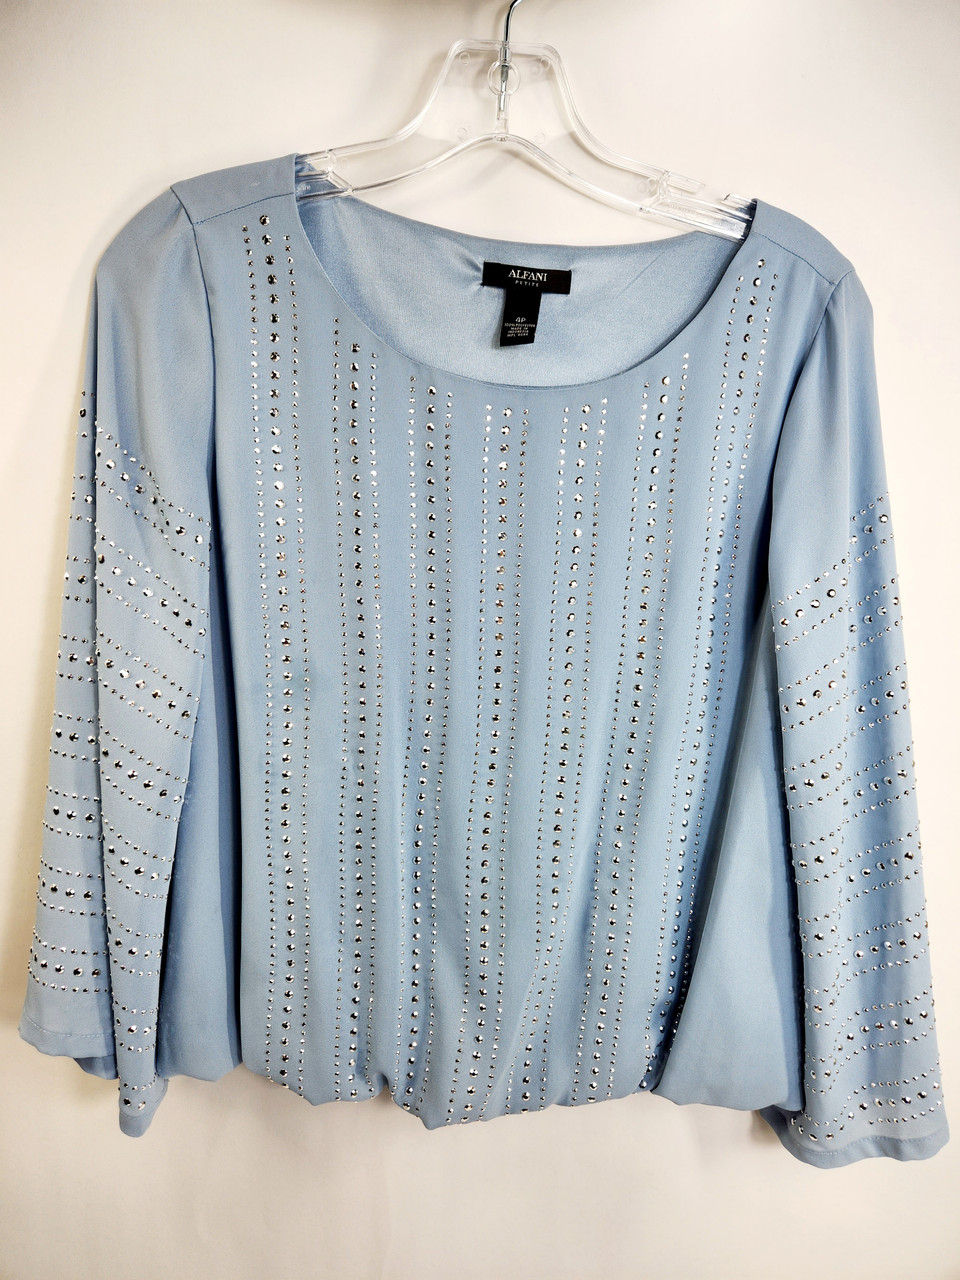 ALFANI Petite Long-sleeve Blouse with Silver Studs, Blue, Size 4P